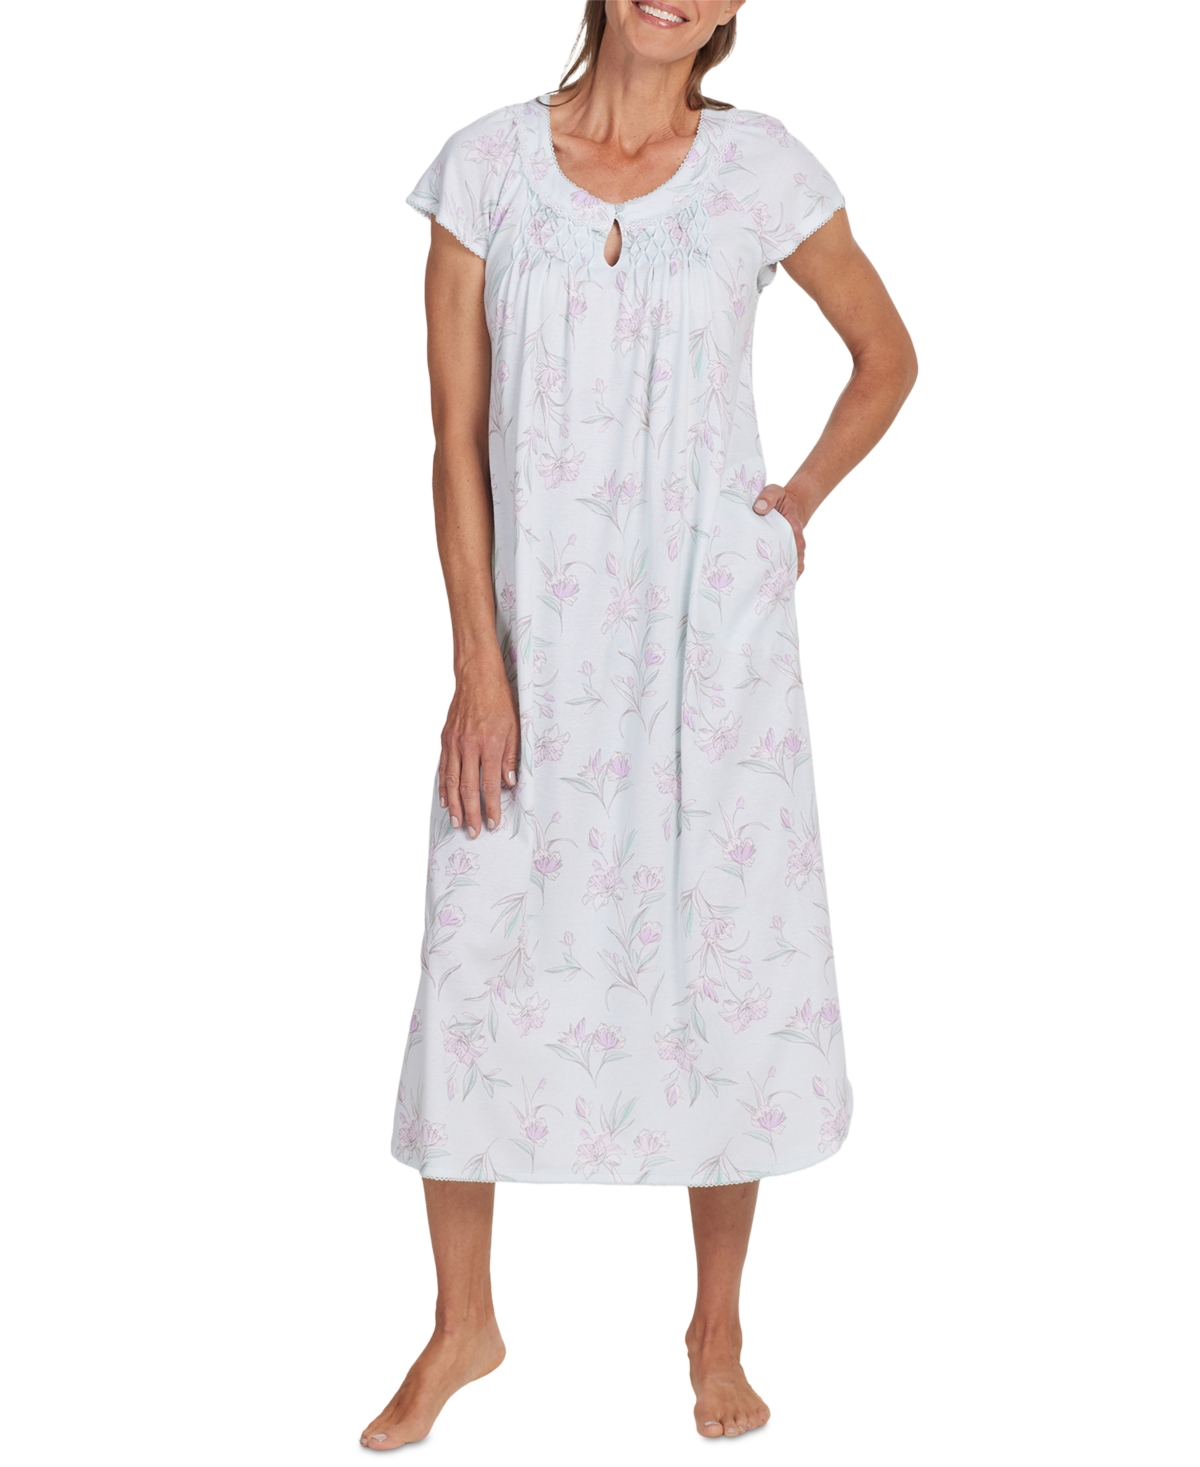 Women's Short-Sleeve Floral Keyhole Nightgown - Aqua/lilac Floral Stems